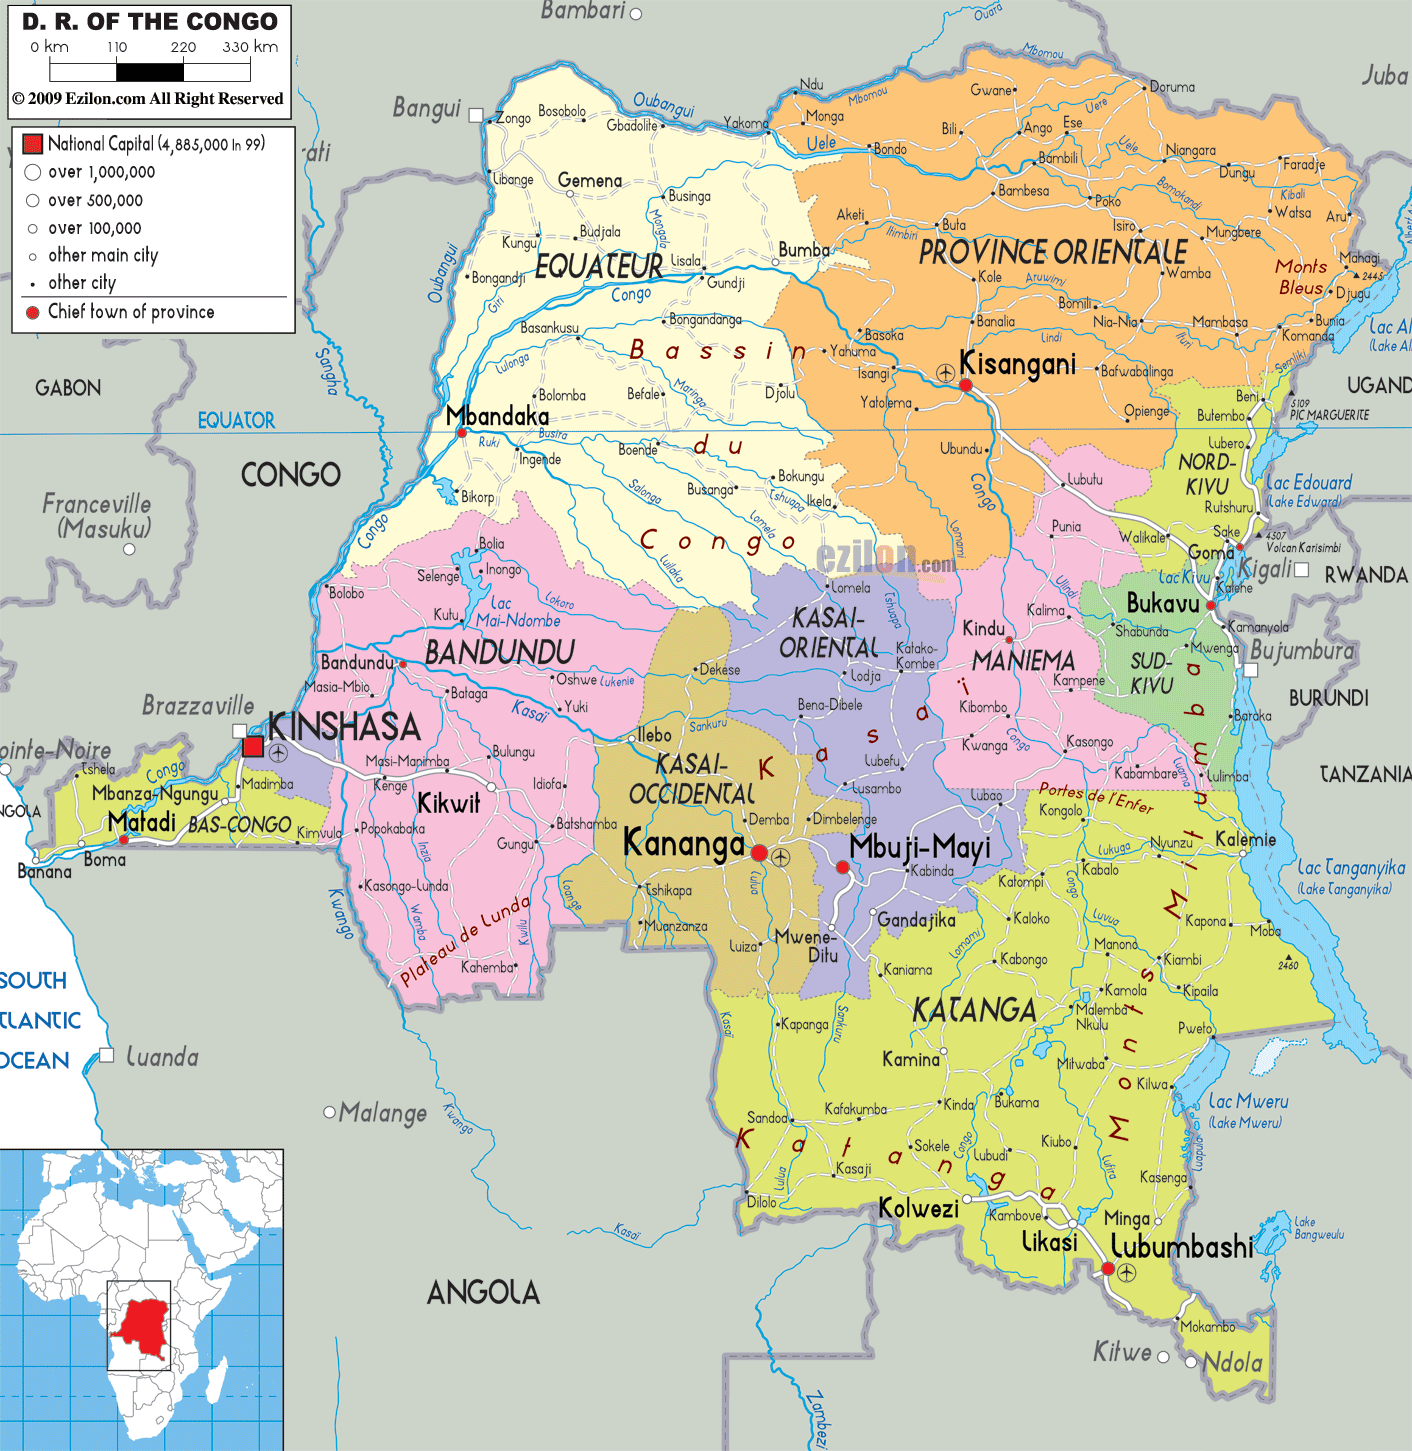 MAPS OF DEMOCRATIC REPUBLIC OF THE CONGO